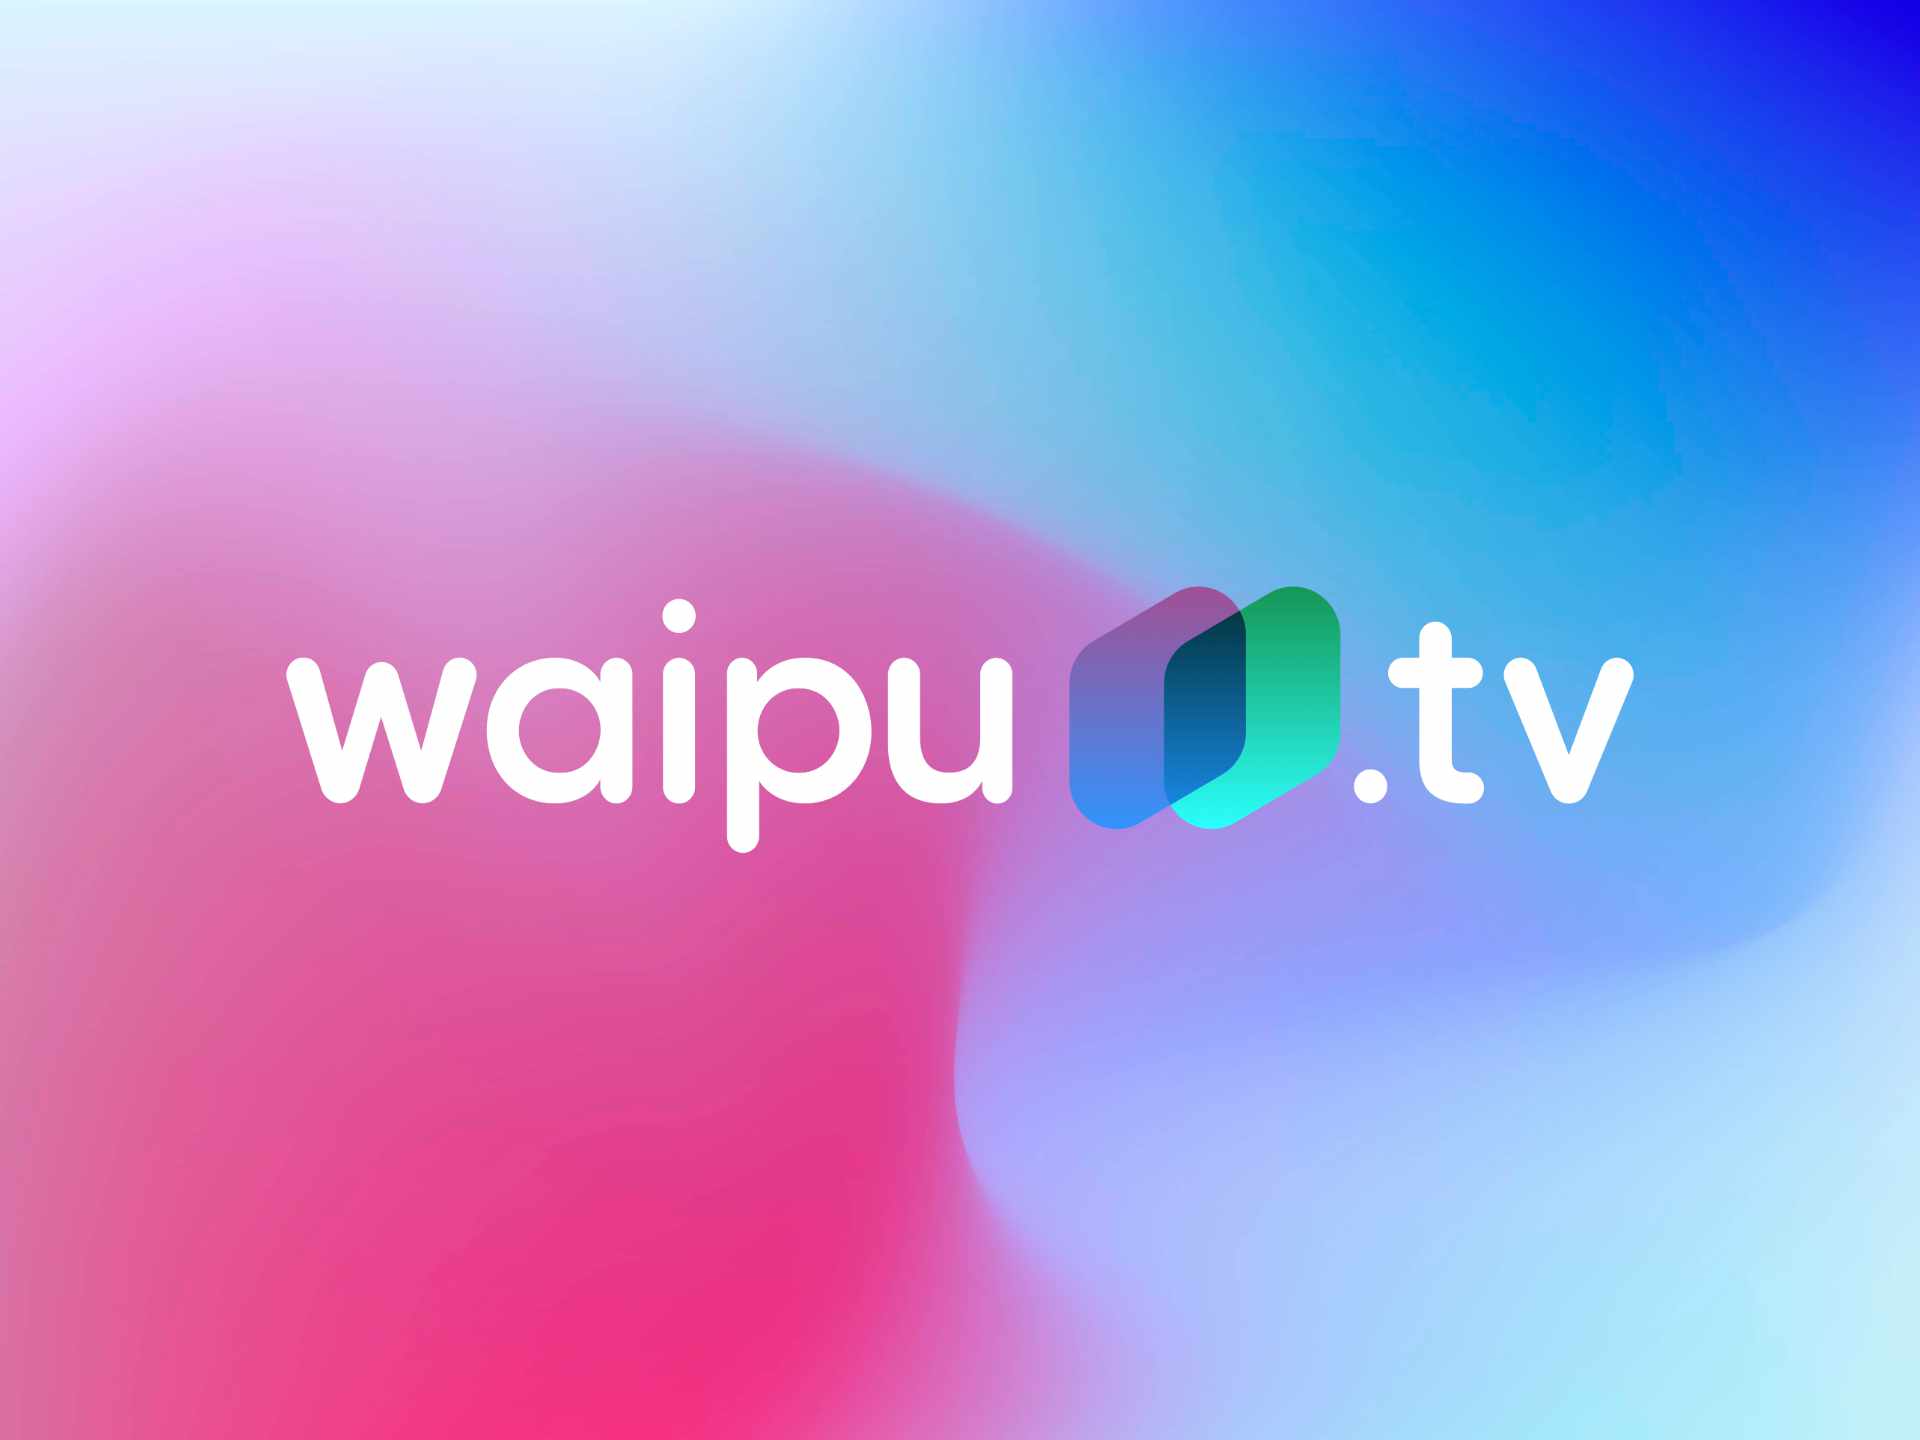 waipu.tv baut sein HD-Angebot auf 165 Kanäle aus - 4K Filme